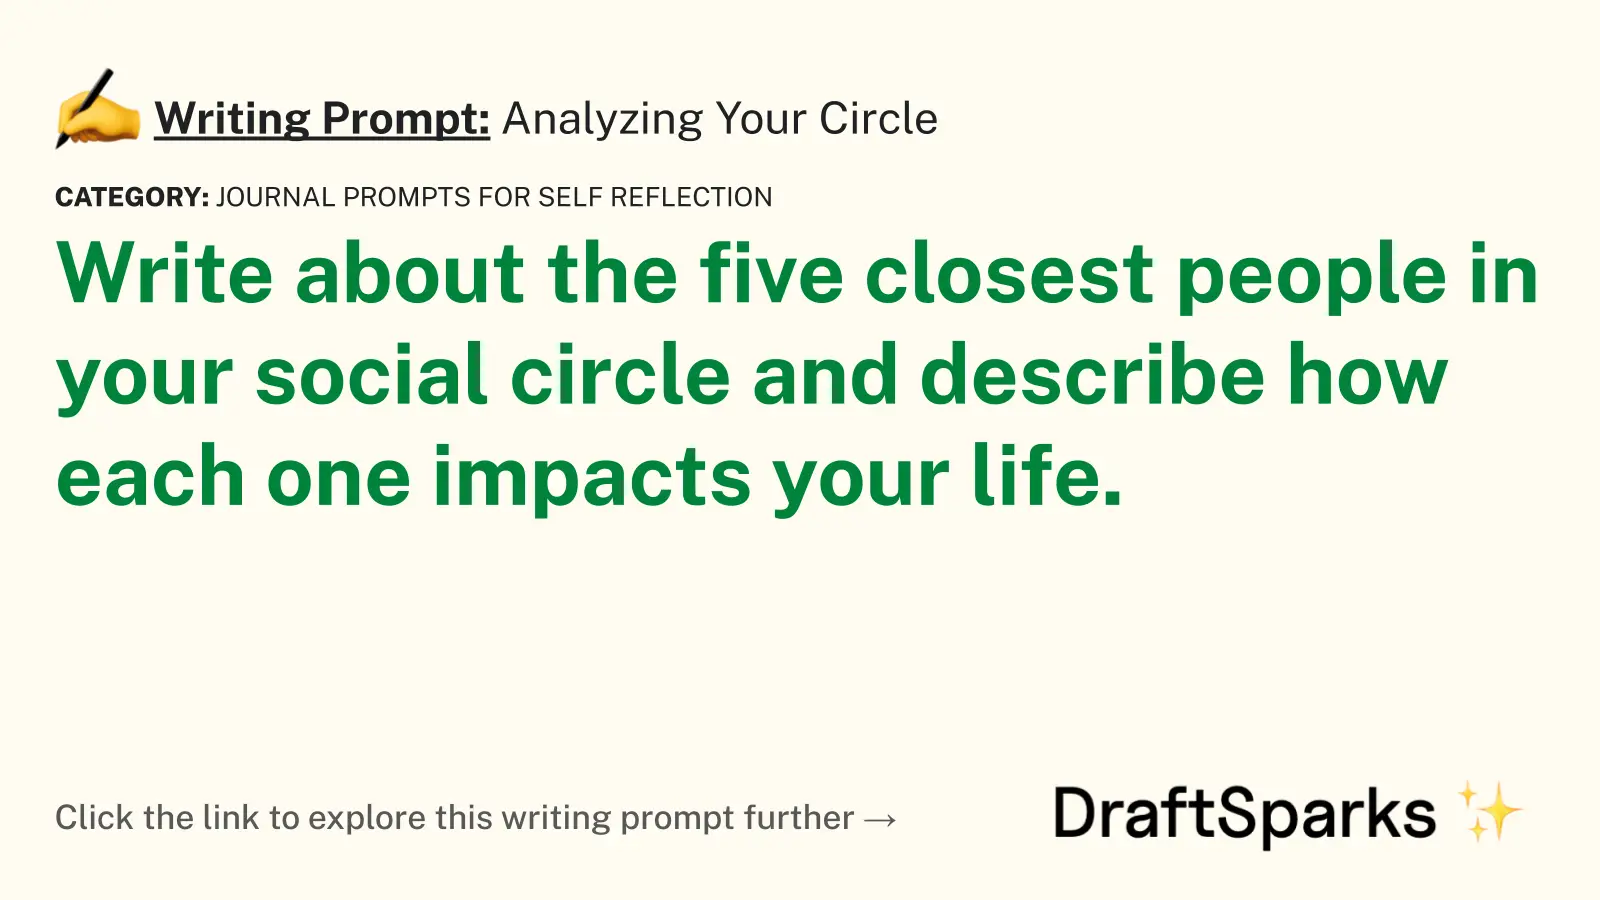 Analyzing Your Circle